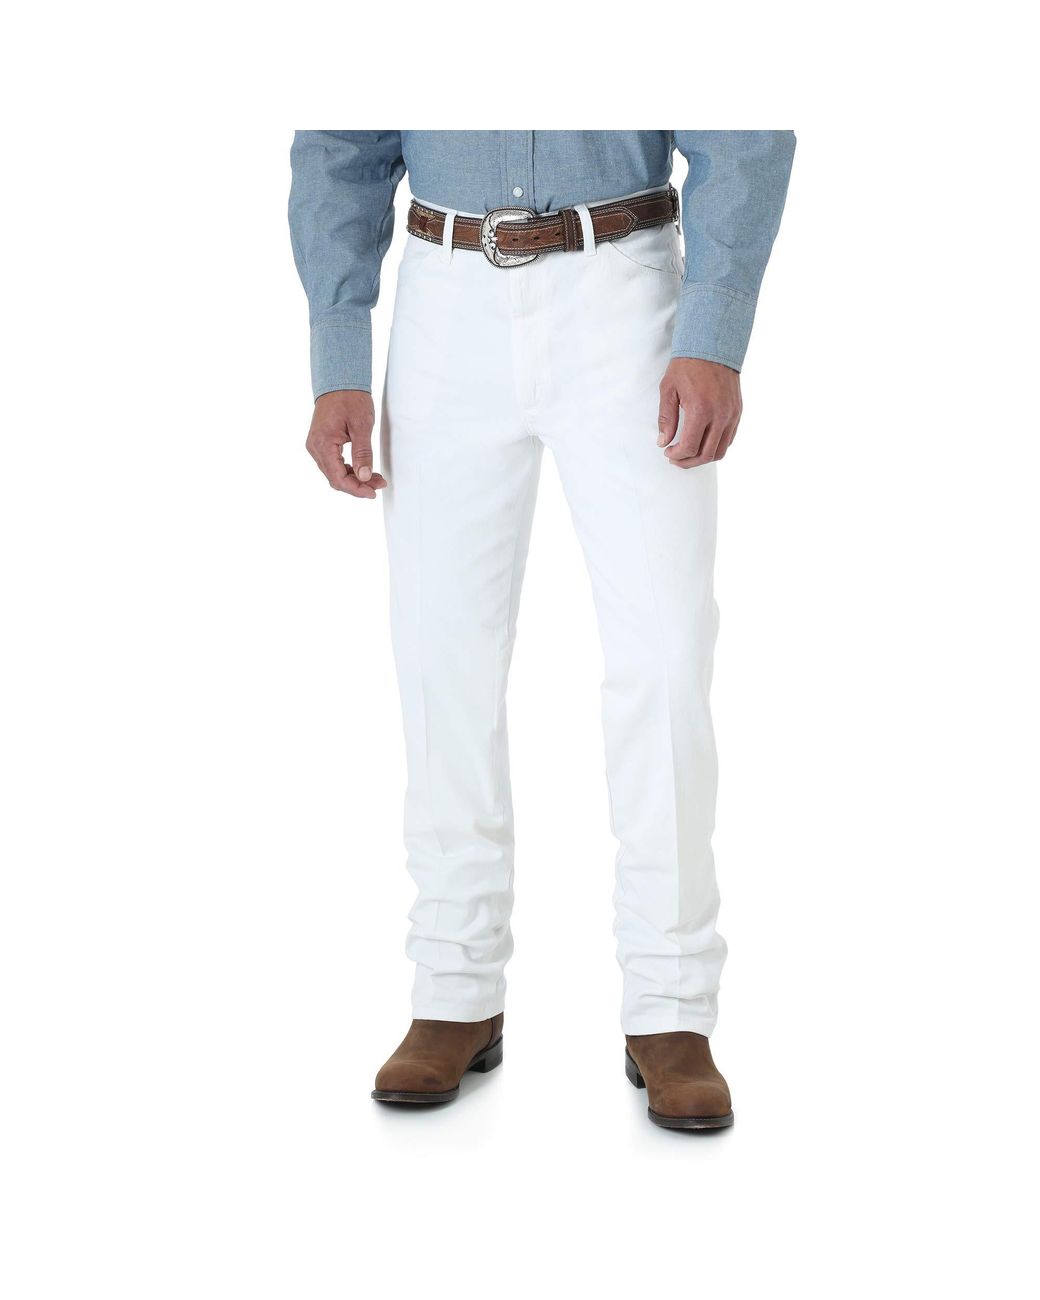 Wrangler Denim 0936 Cowboy Cut Slim Fit Jean in White for Men - Save 42 ...